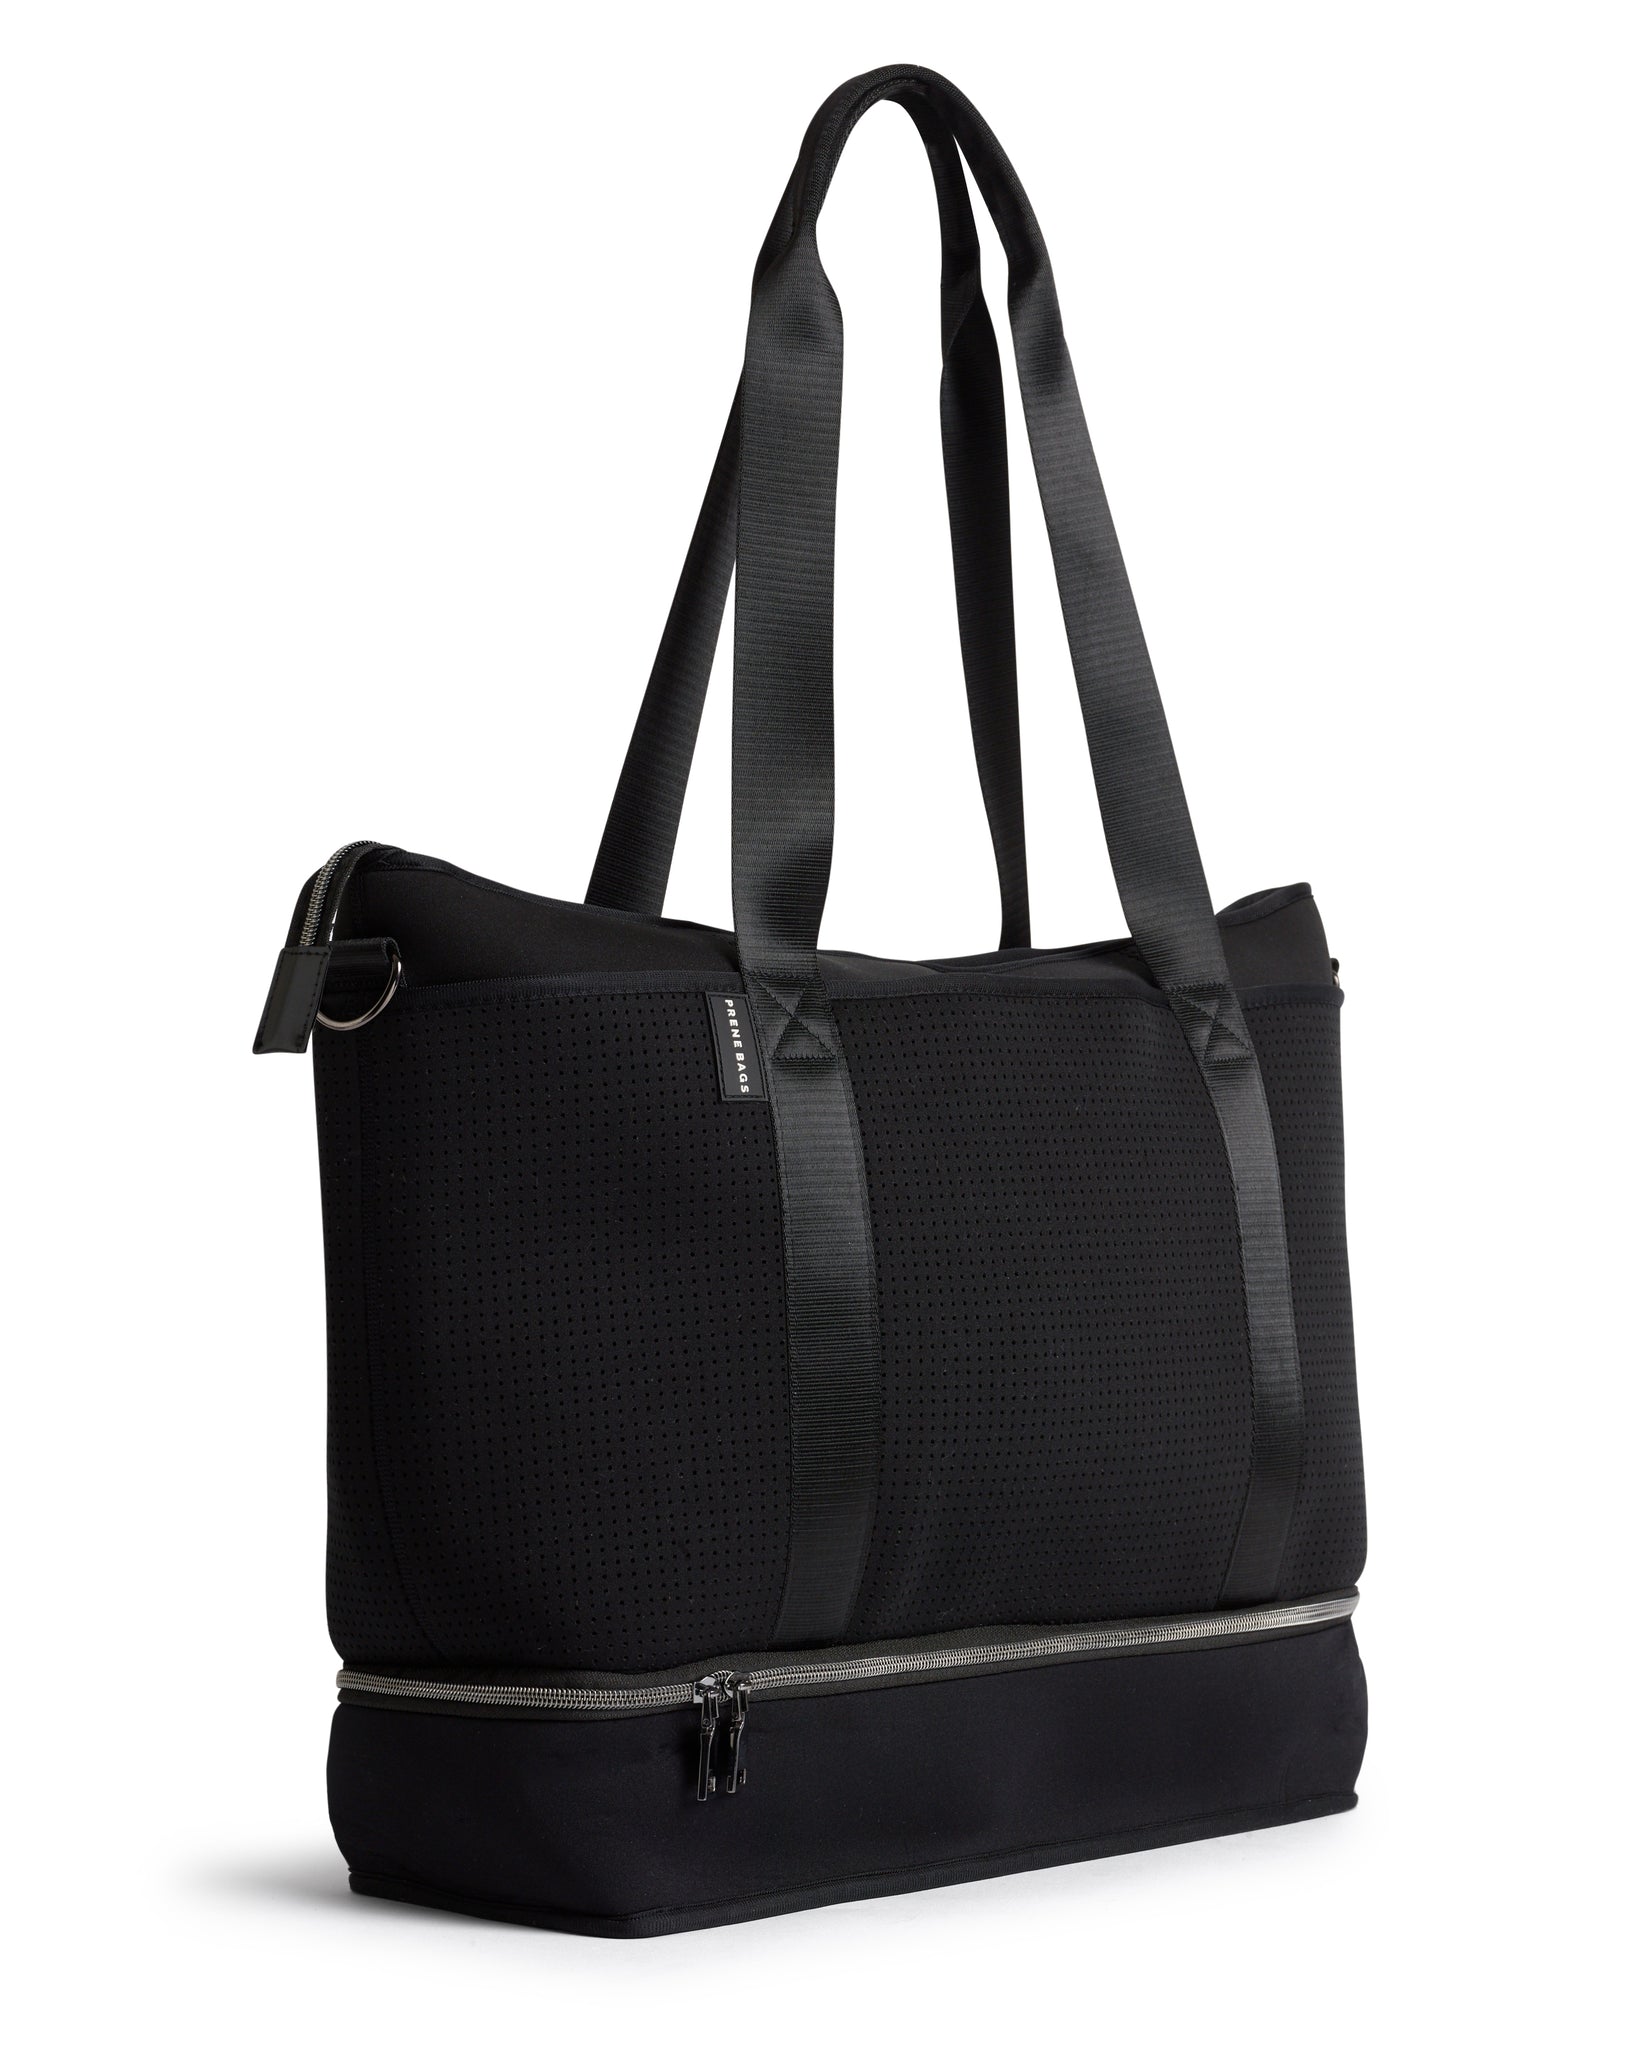 The Saturday Bag (BLACK) Neoprene Tote / Baby / Travel Bag